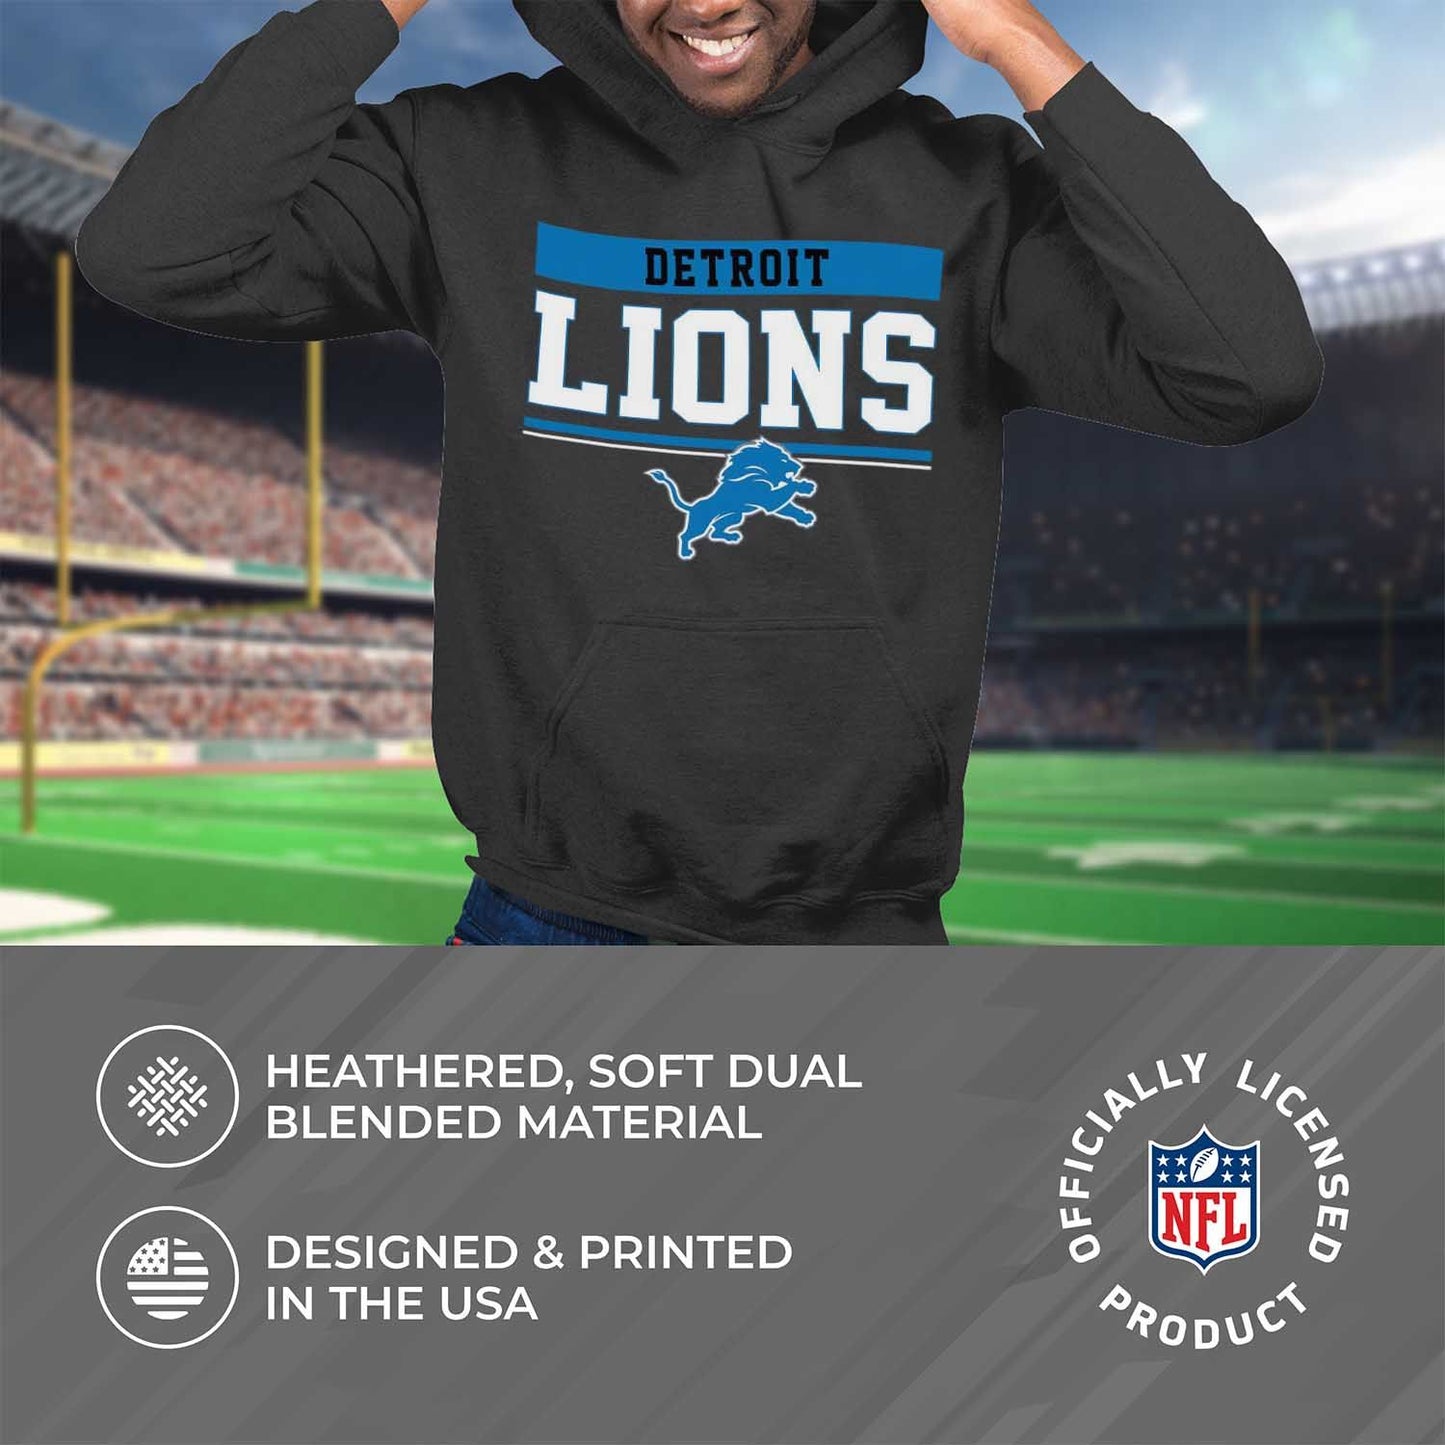 Detroit Lions NFL Adult Gameday Charcoal Hooded Sweatshirt - Charcoal